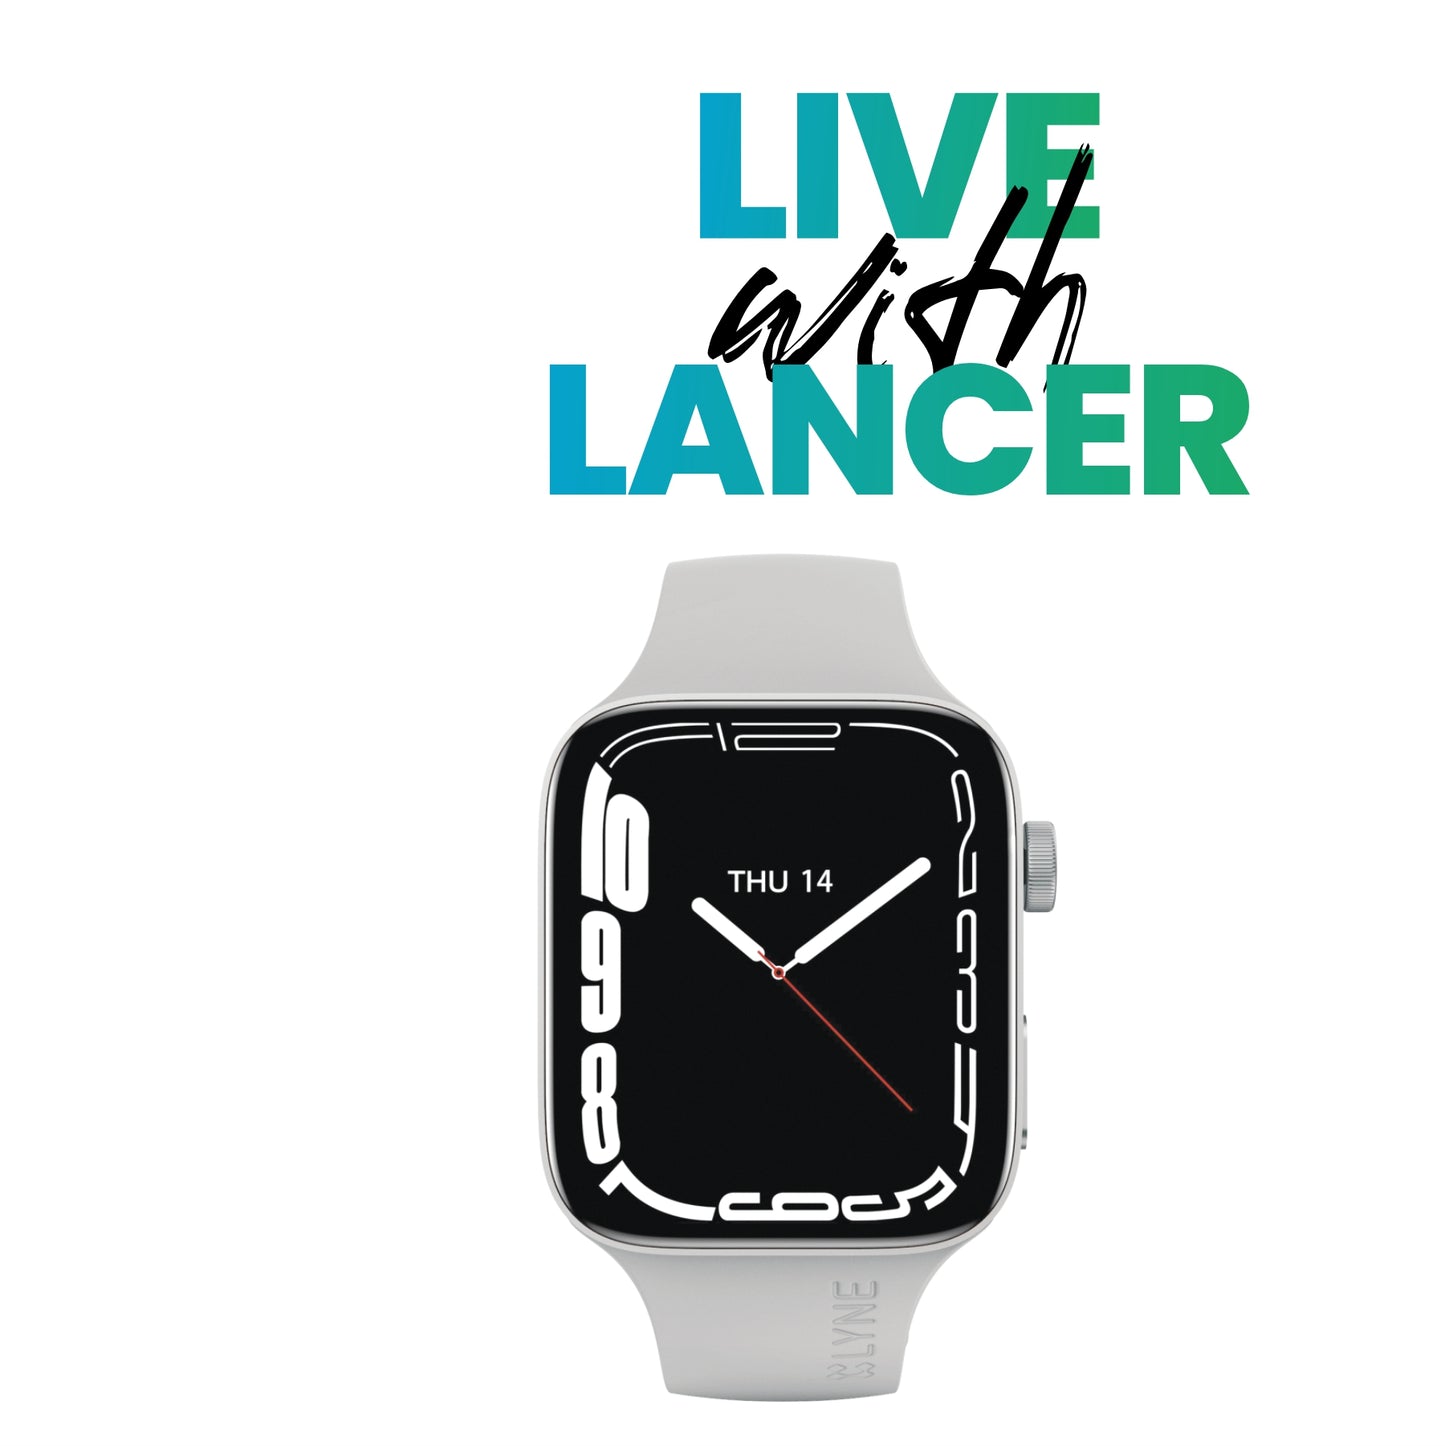 LYNE Lancer 4 Smart Watch 1.75" HD Screen, Bluetooth Calling & IP67 Water Resistance